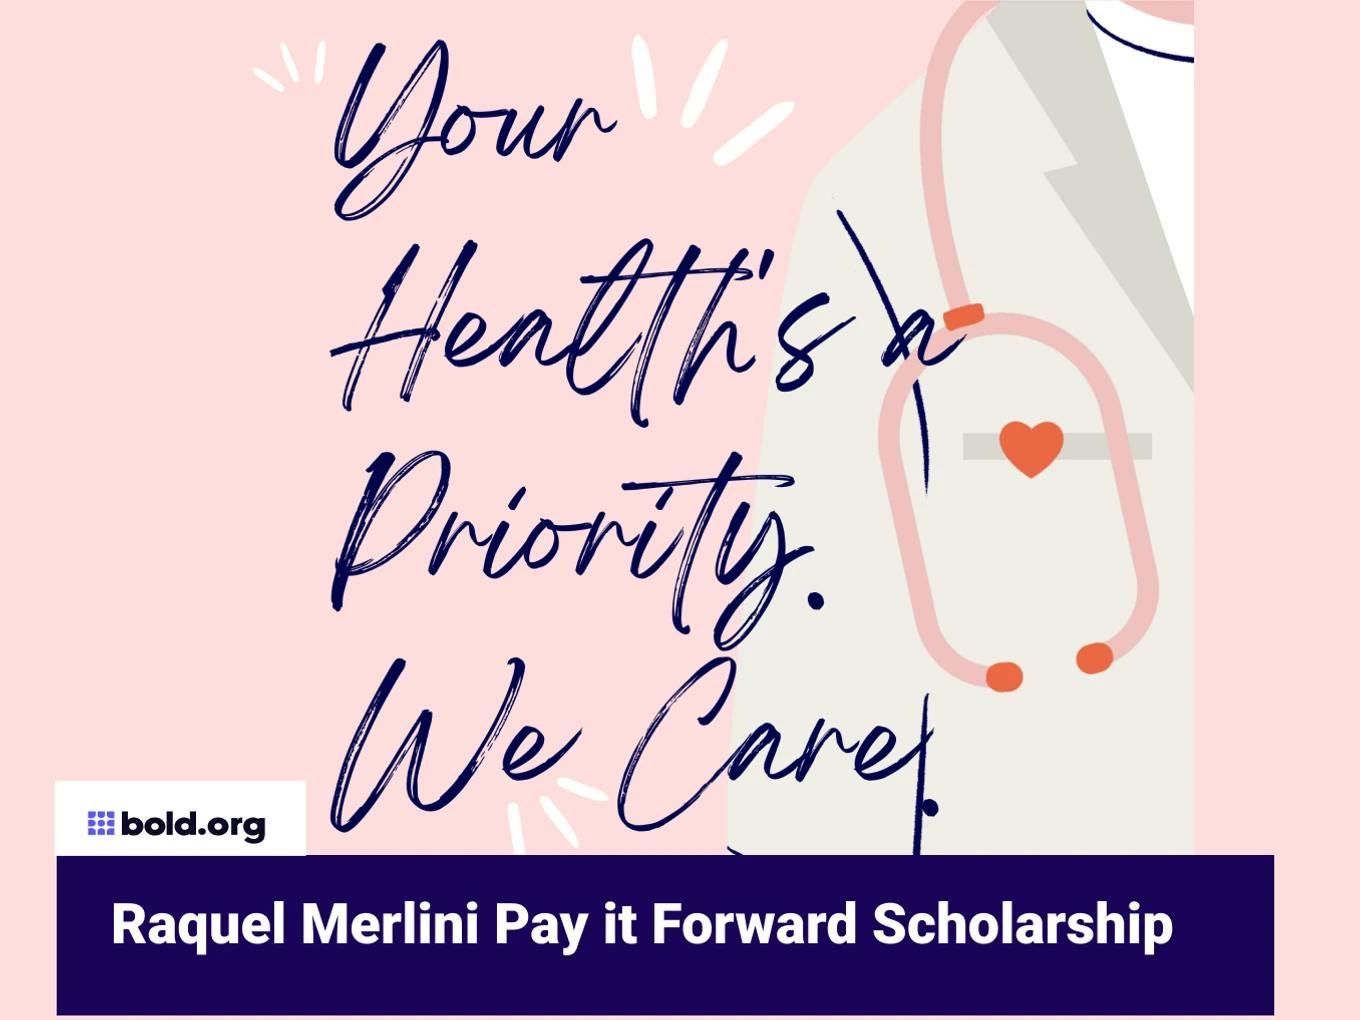 Raquel Merlini Pay it Forward Scholarship